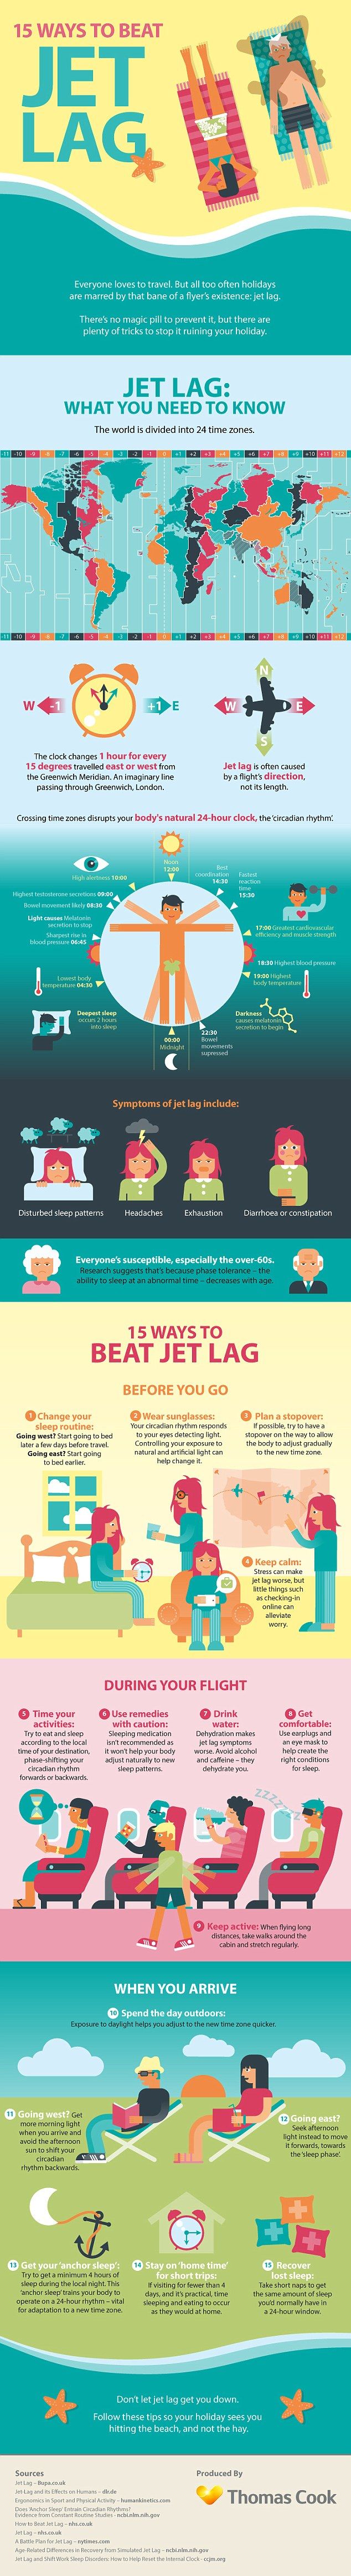 15 Ways to Avoid Jetleg (Or at Least Lessen It) - Global Girl Travels